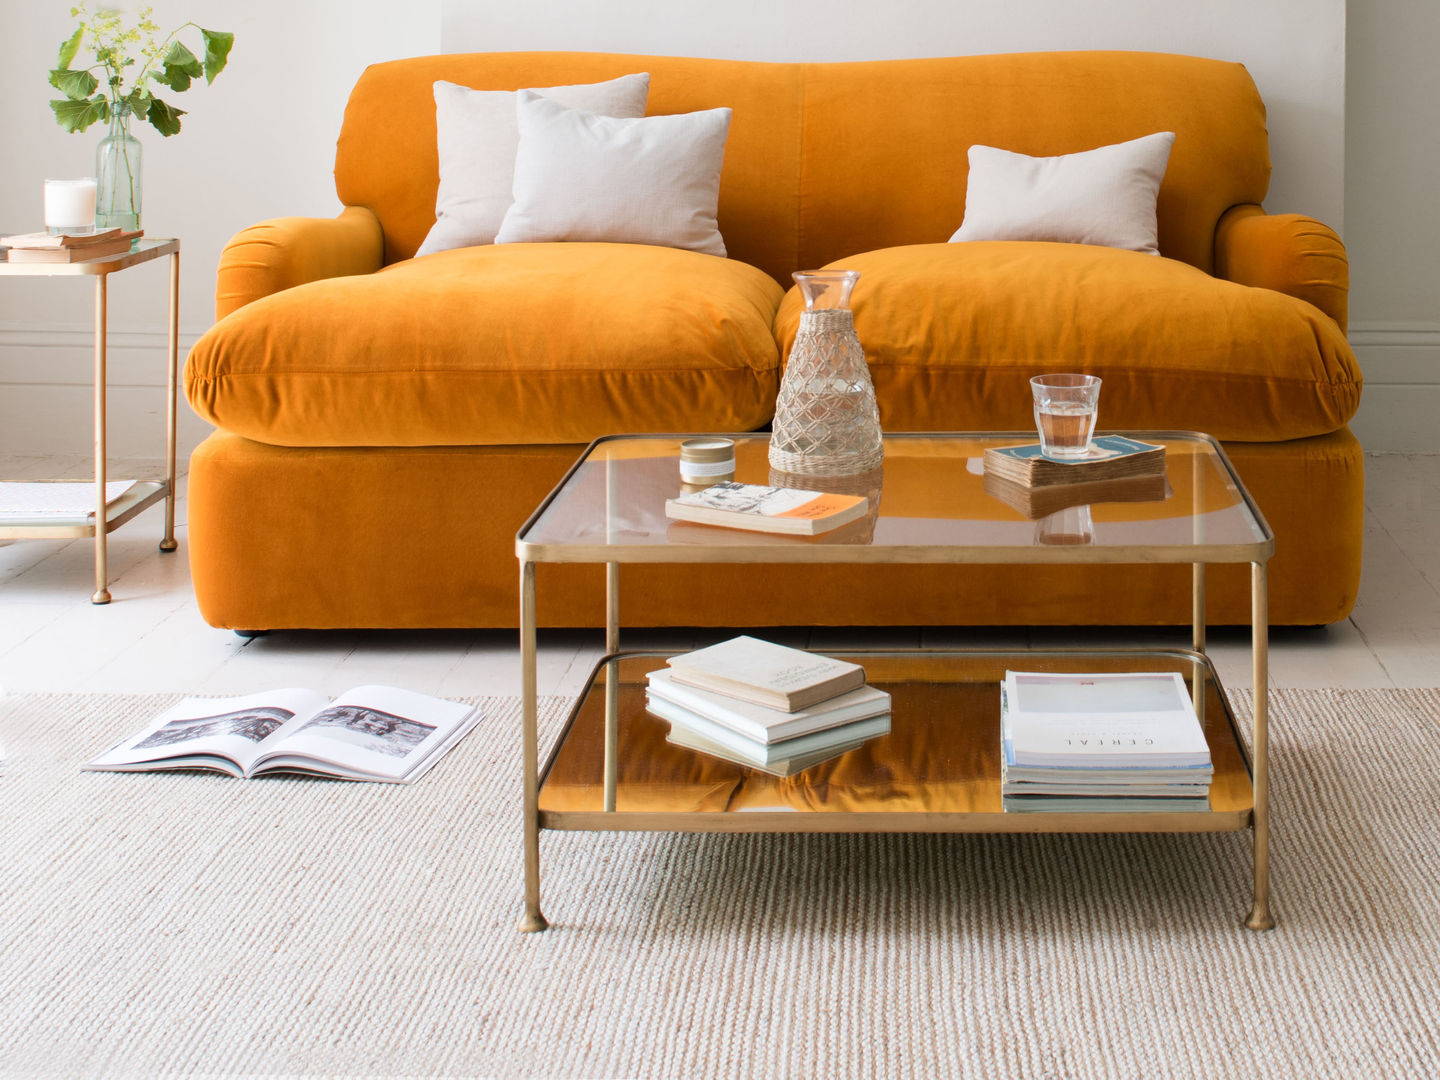 Wonder-Boy coffee table Loaf Modern Living Room brass,glass,coffee table,table,living room,orange sofa,sofa